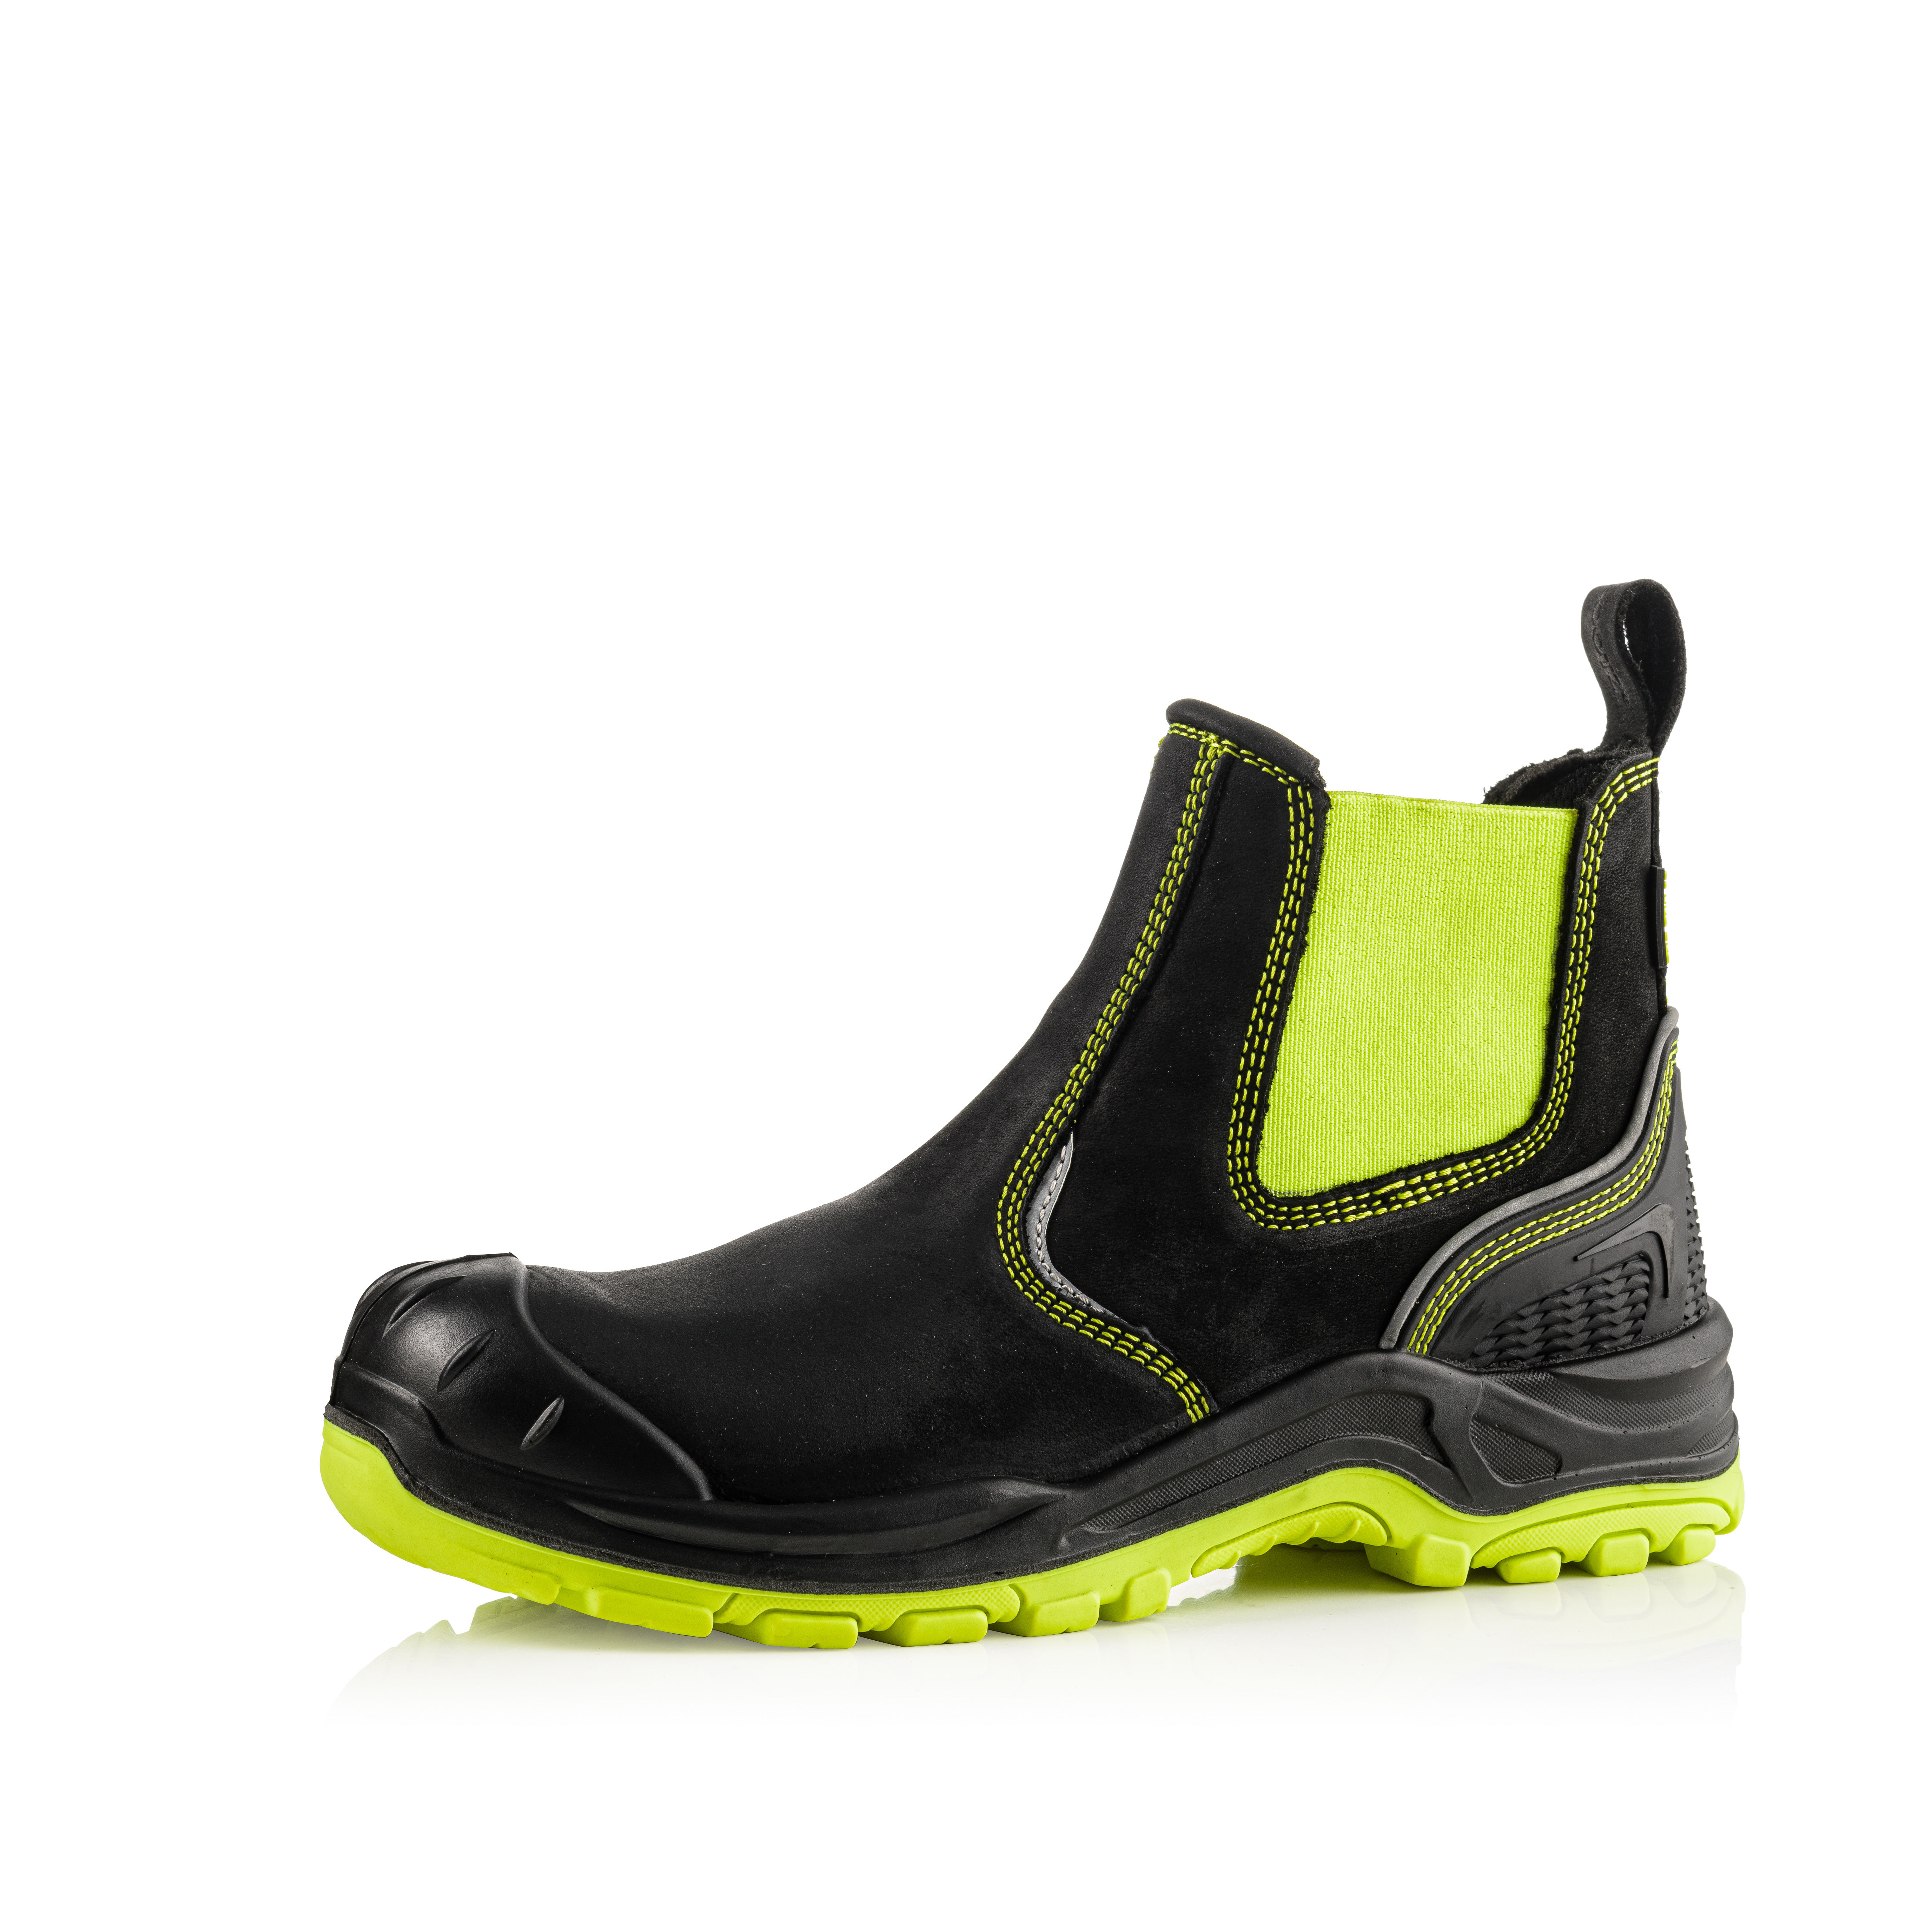 Buckler Buckz Viz Hi-Vis Waterproof Safety Dealer Boots Black/Yellow - BVIZ3YLBK